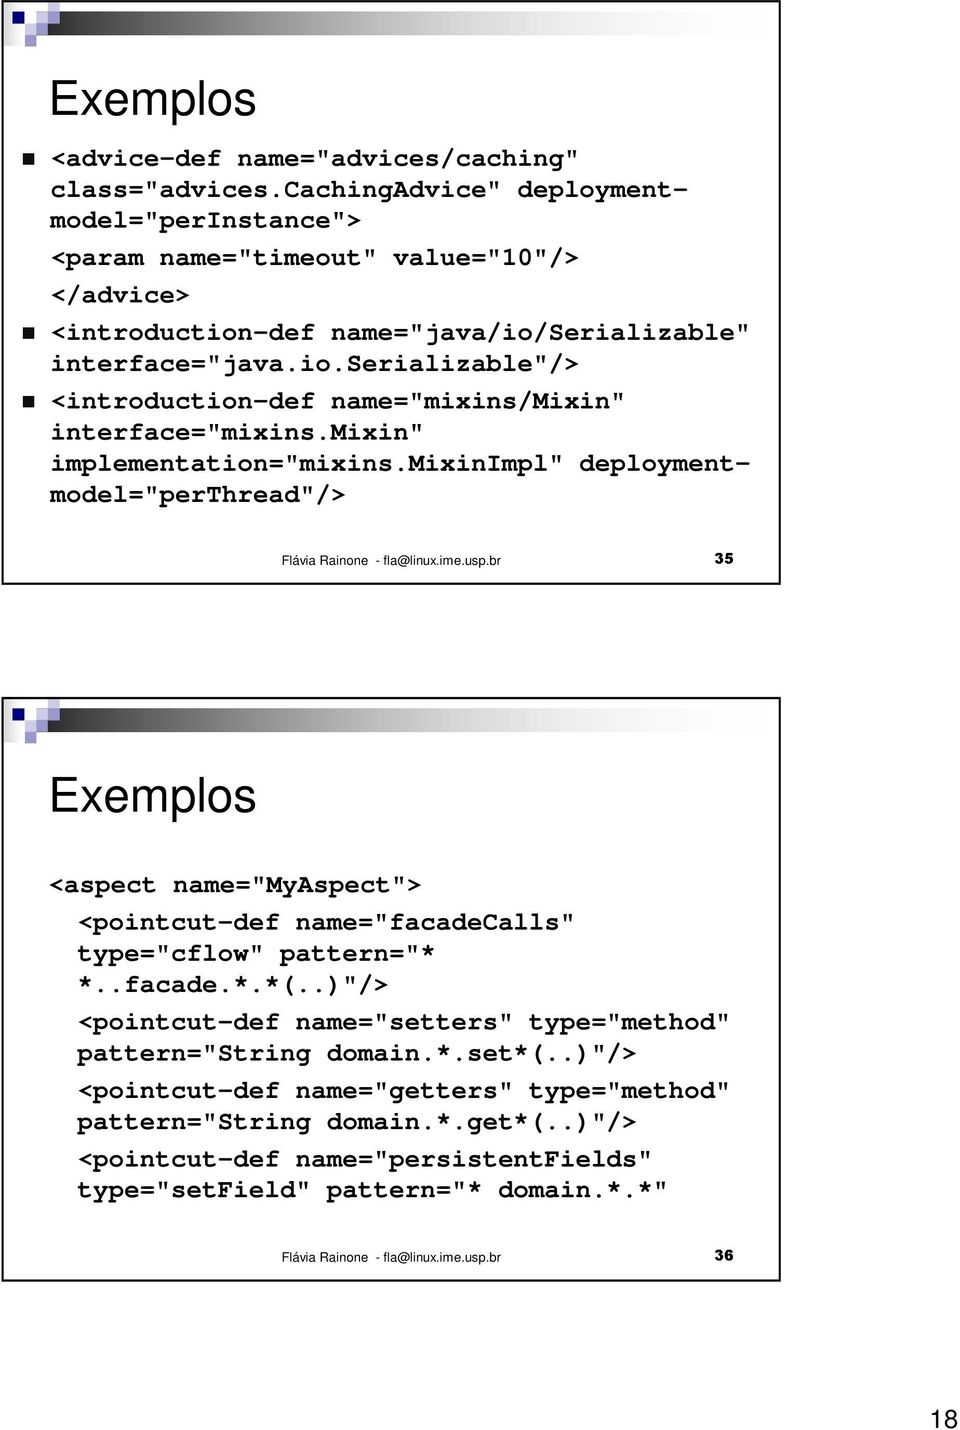 mixin" implementation="mixins.mixinimpl" deploymentmodel="perthread"/> Exemplos <aspect name="myaspect"> <pointcut-def name="facadecalls" type="cflow" pattern="* *..facade.*.*(.